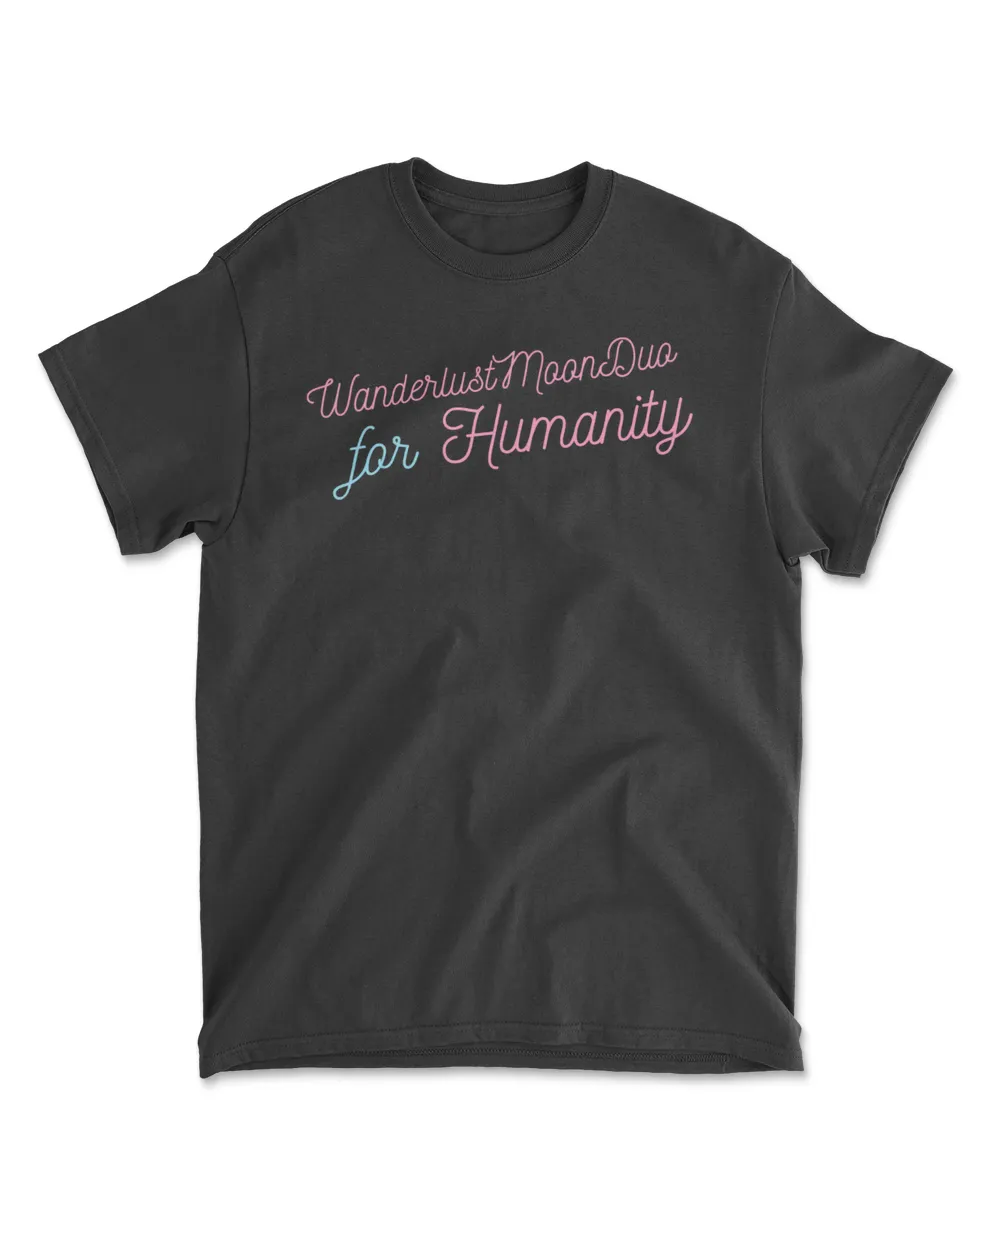 Humanity! T-Shirt